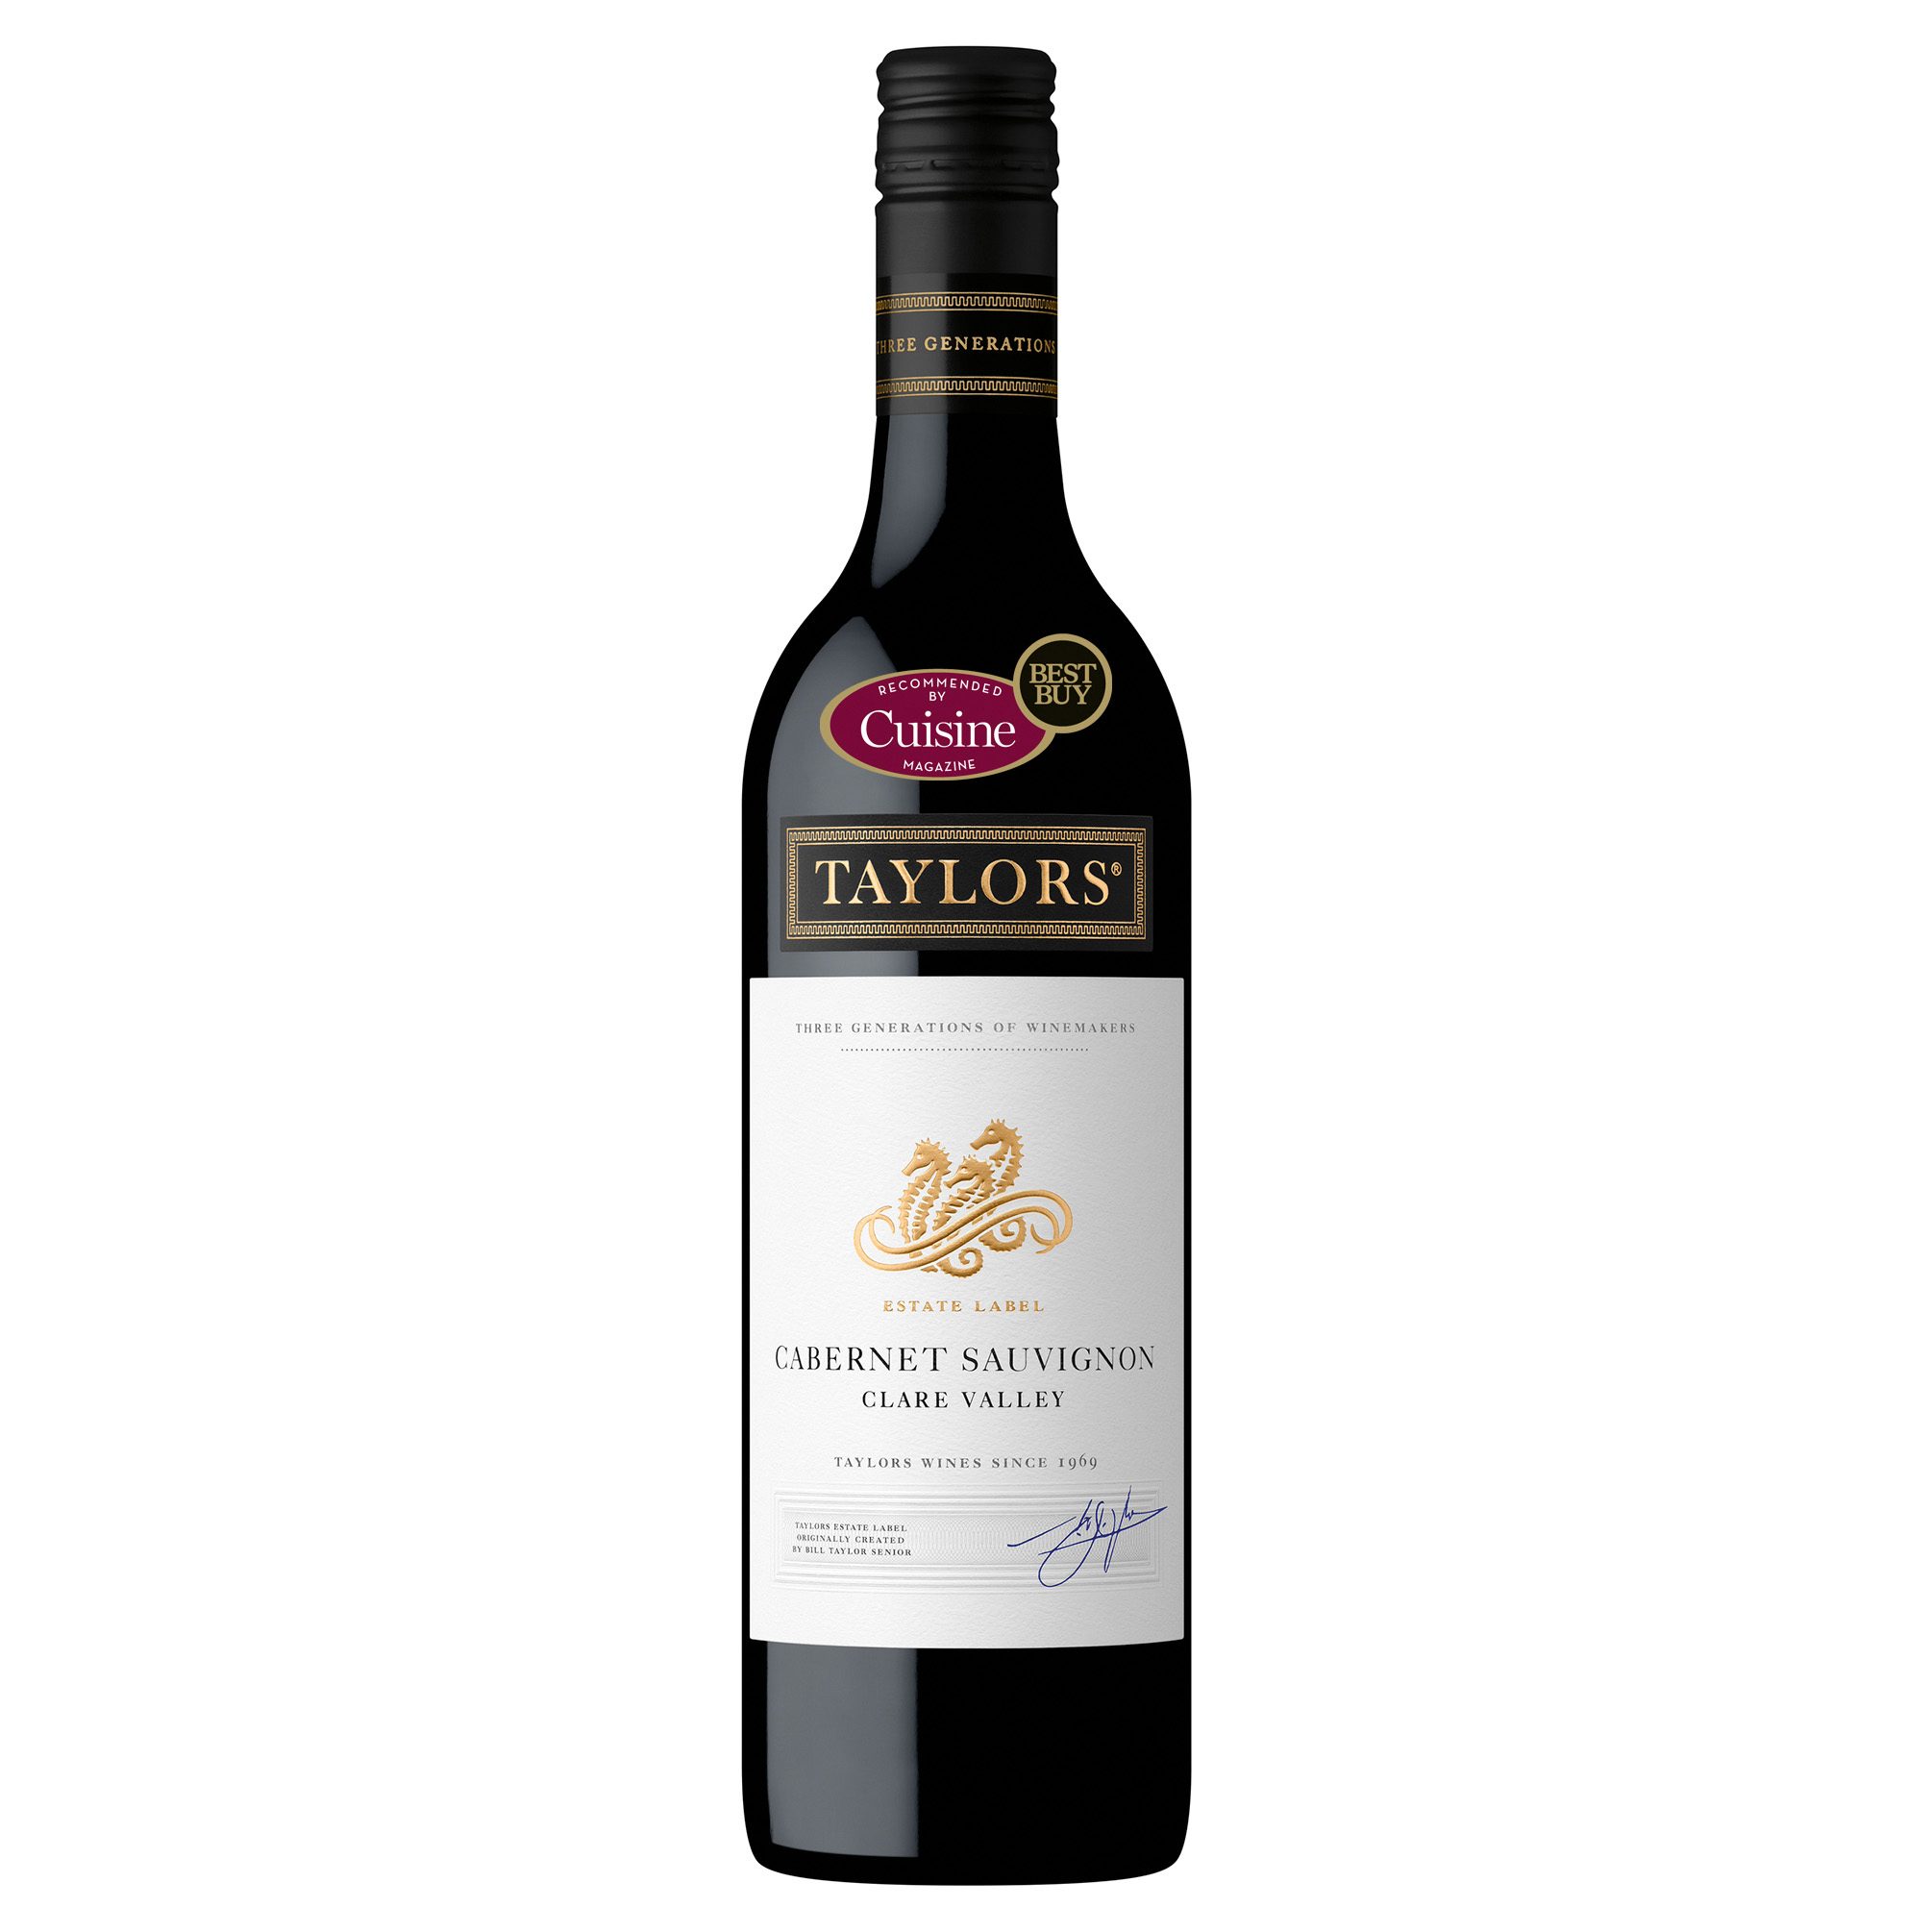 Taylor’s Estate Label Cabernet Sauvignon 2018 (Clare Valley)